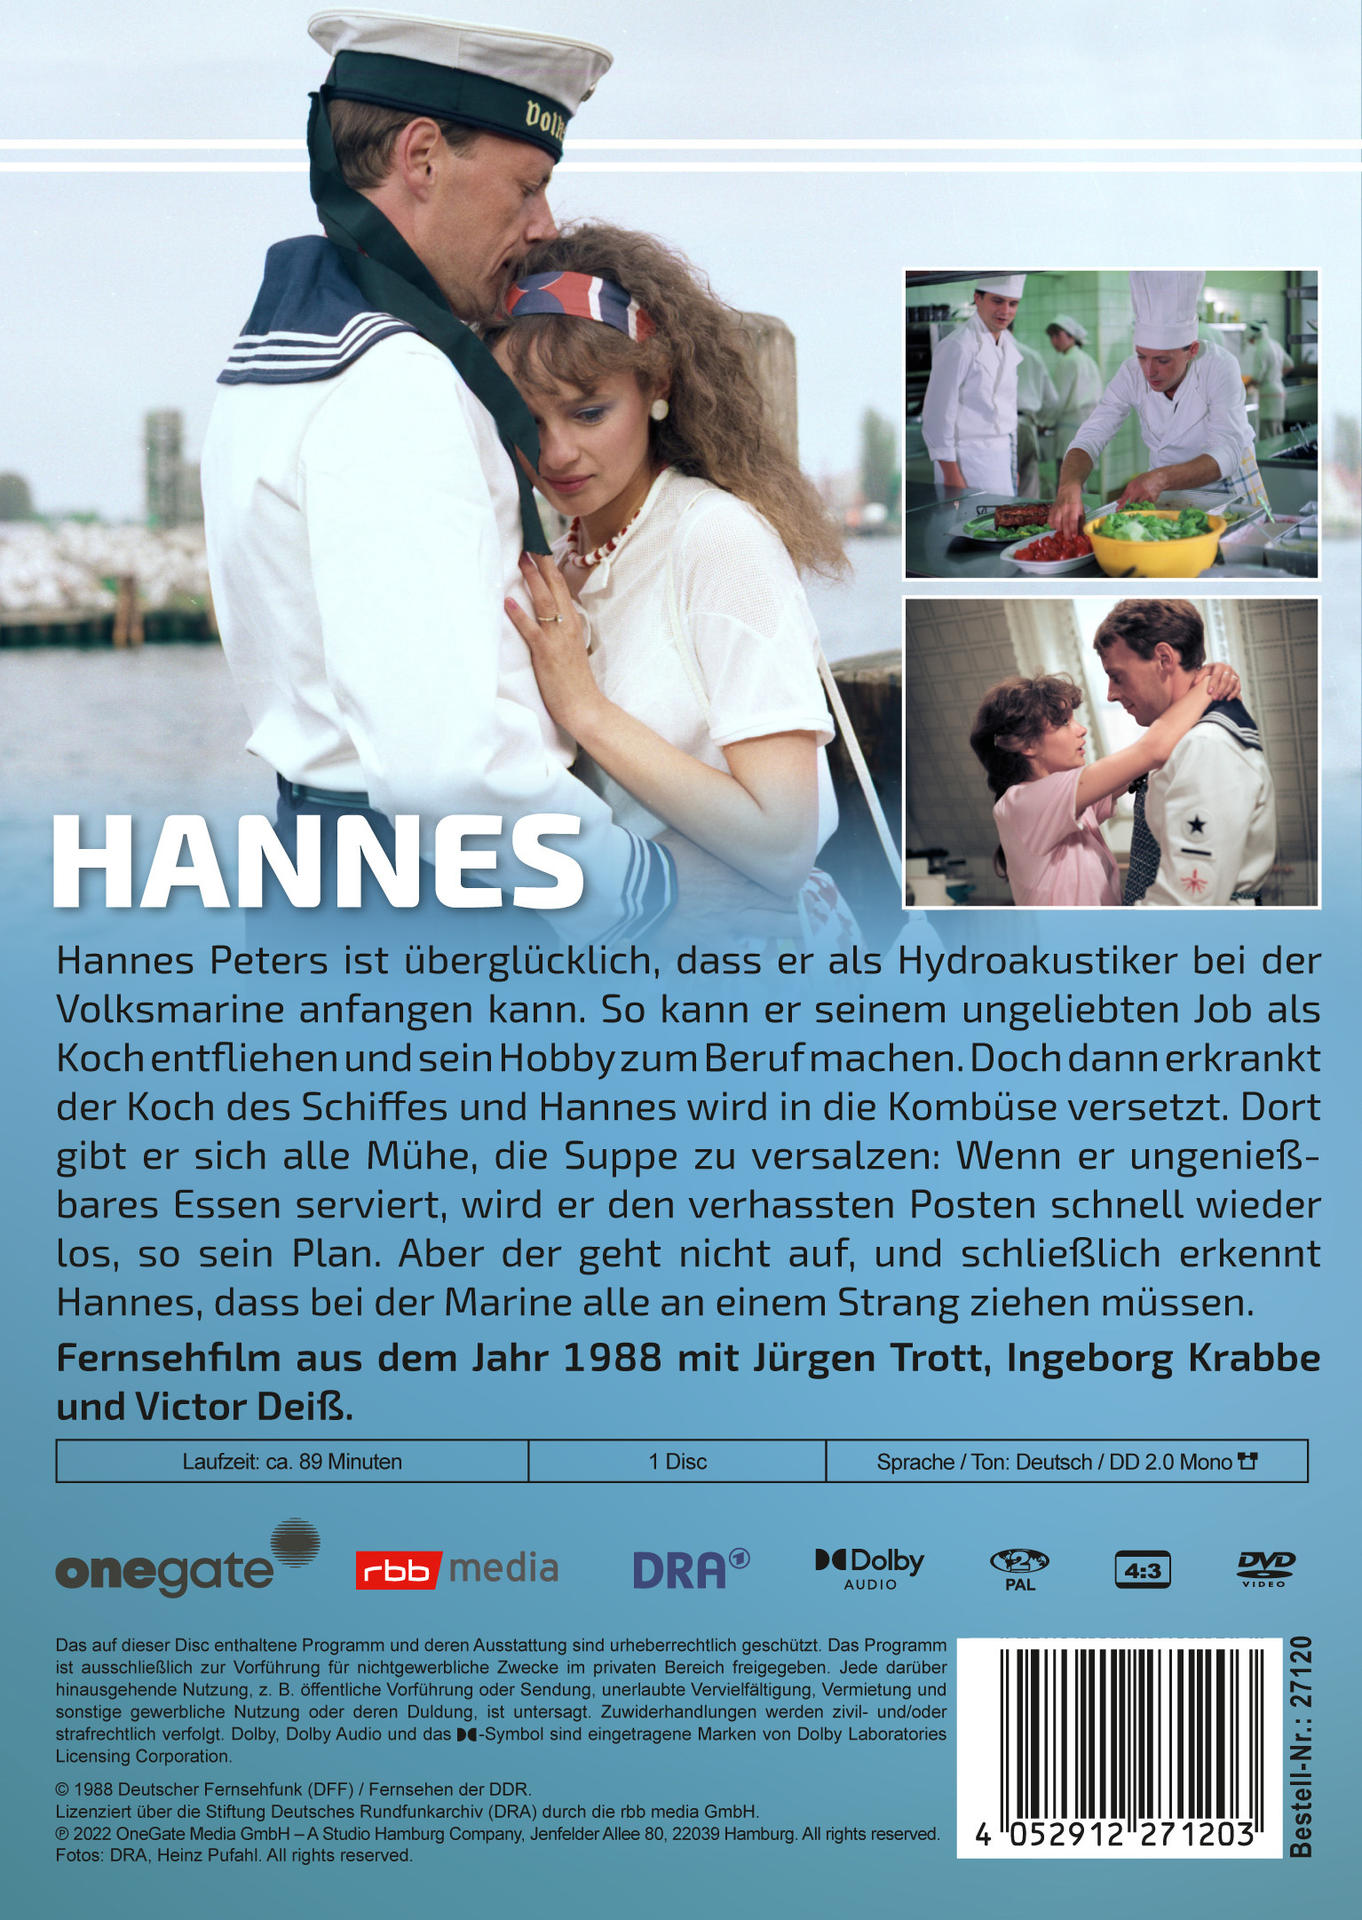 DVD Hannes